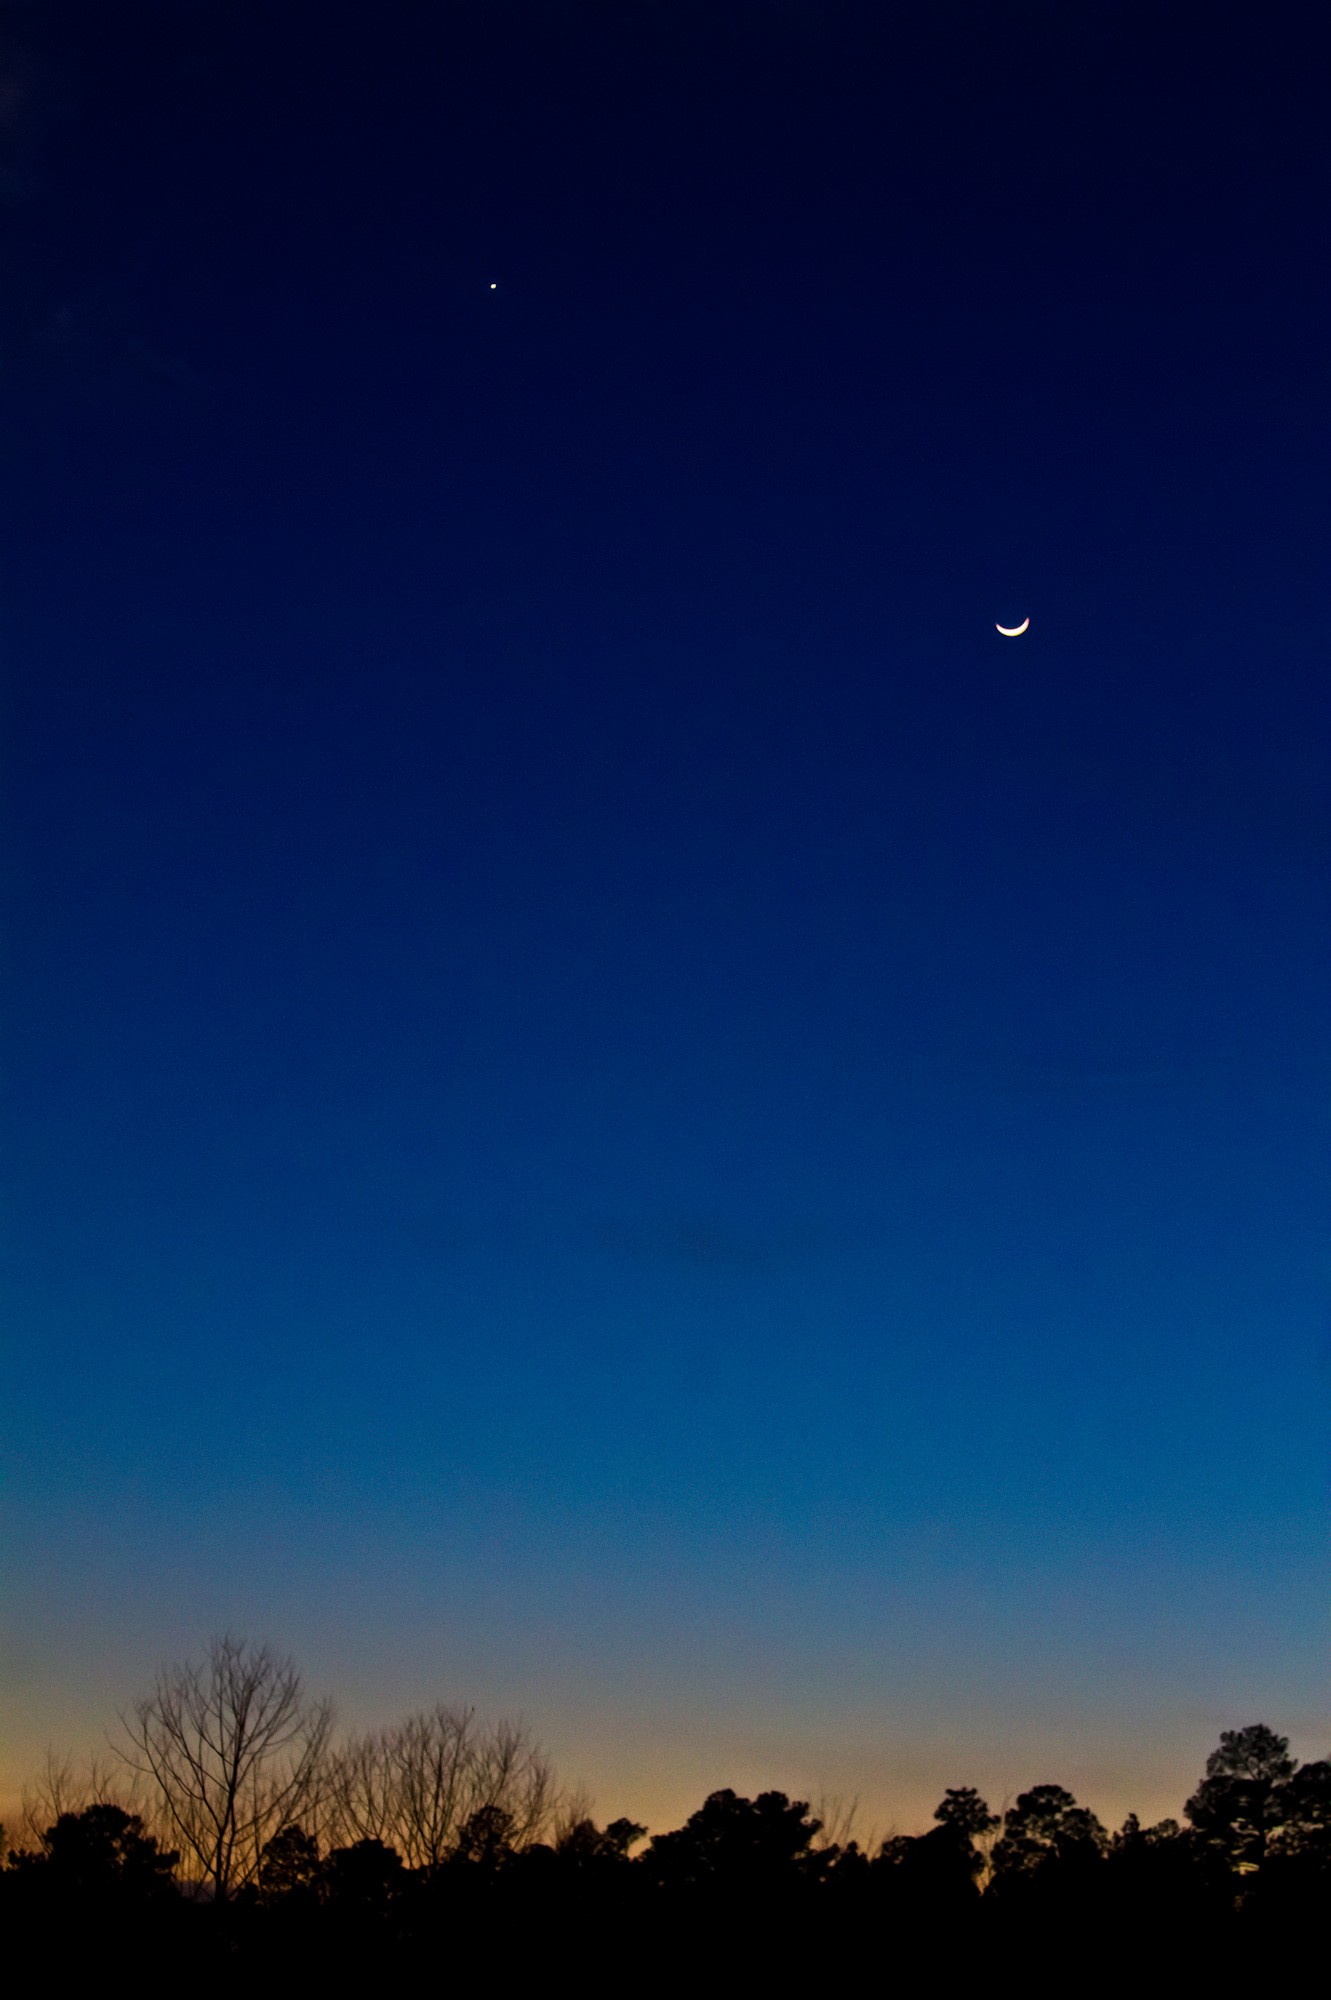 goodnight_moon_by_pianoblack97-d4nlu29.jpg